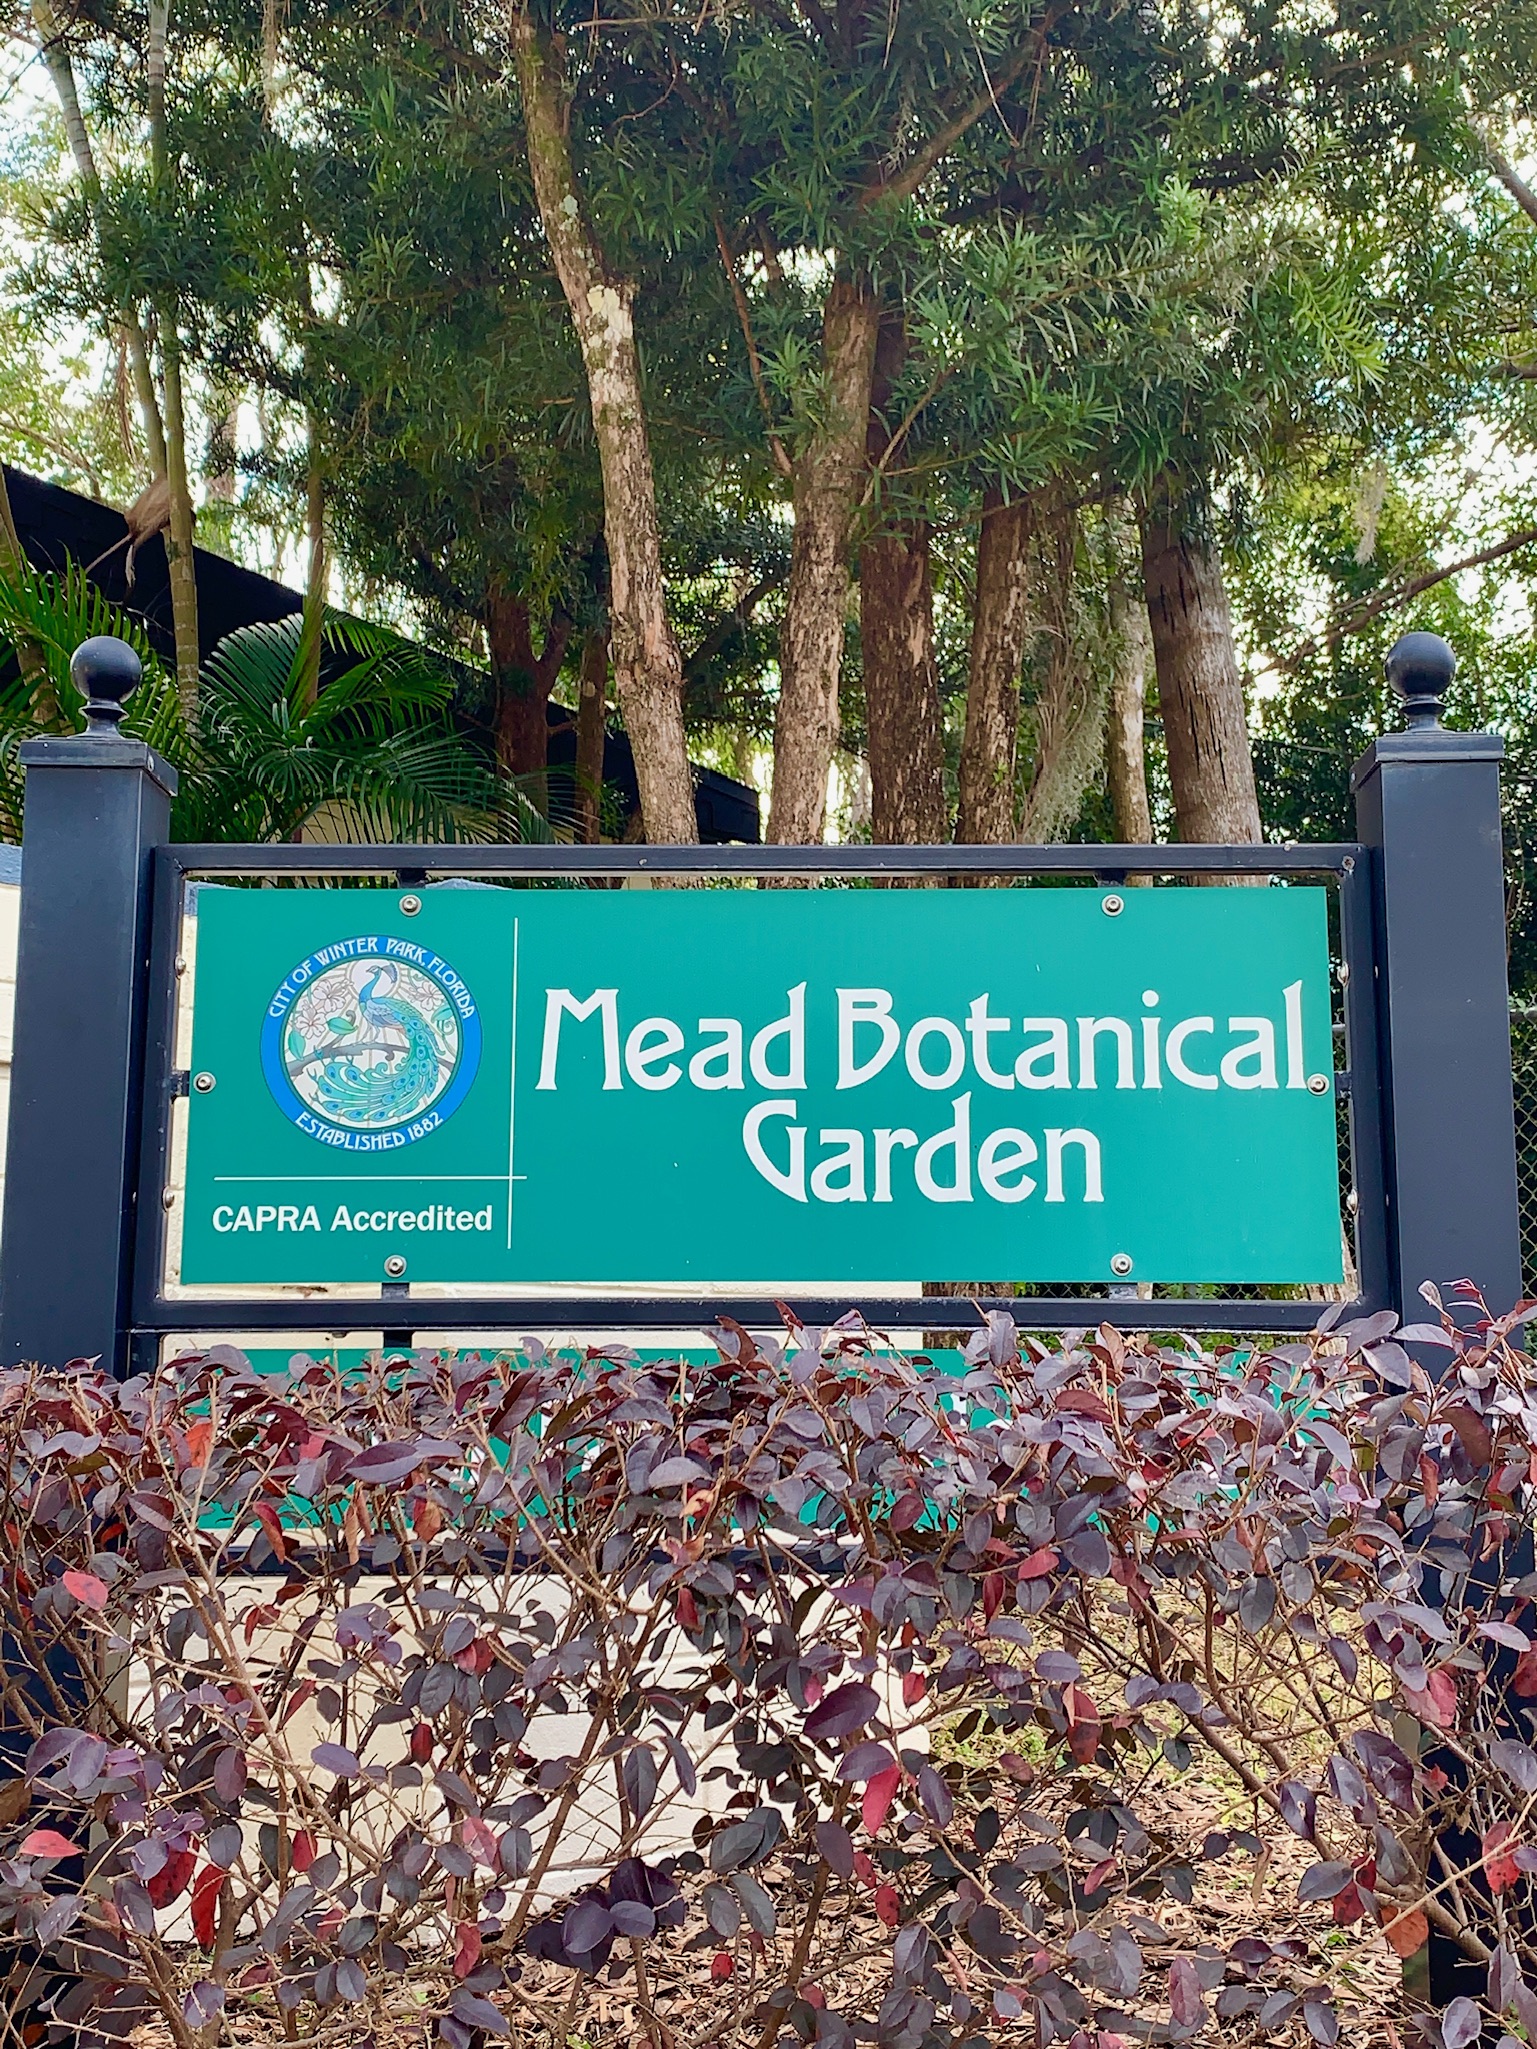 Mead Botanical Garden - Winter Park, Florida